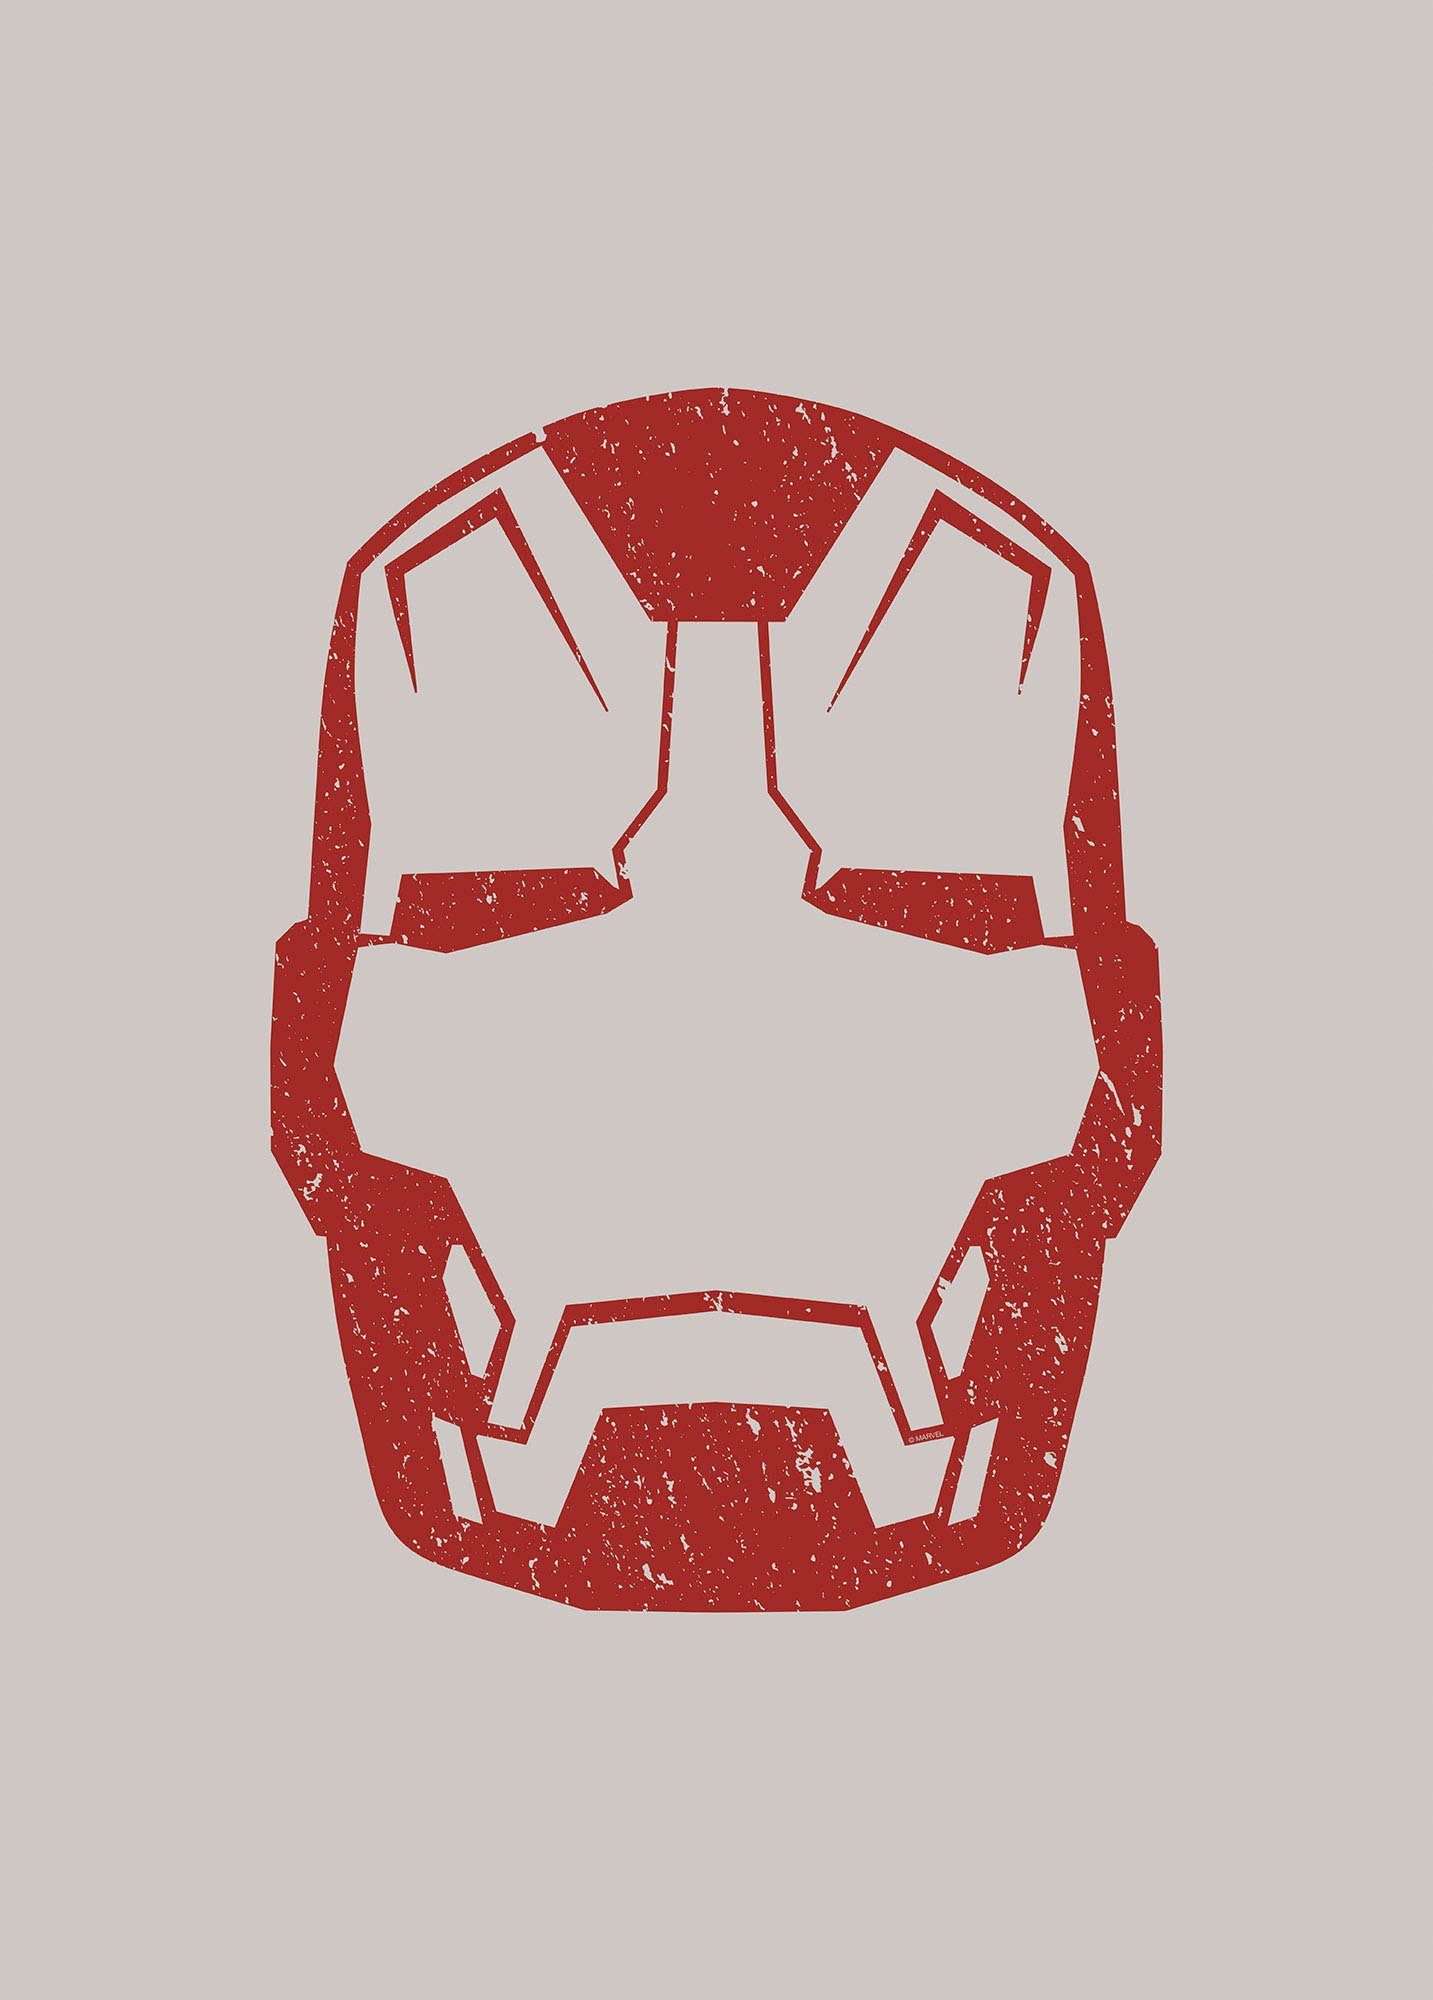 Komar Artprint Iron Man Helmet MK 43